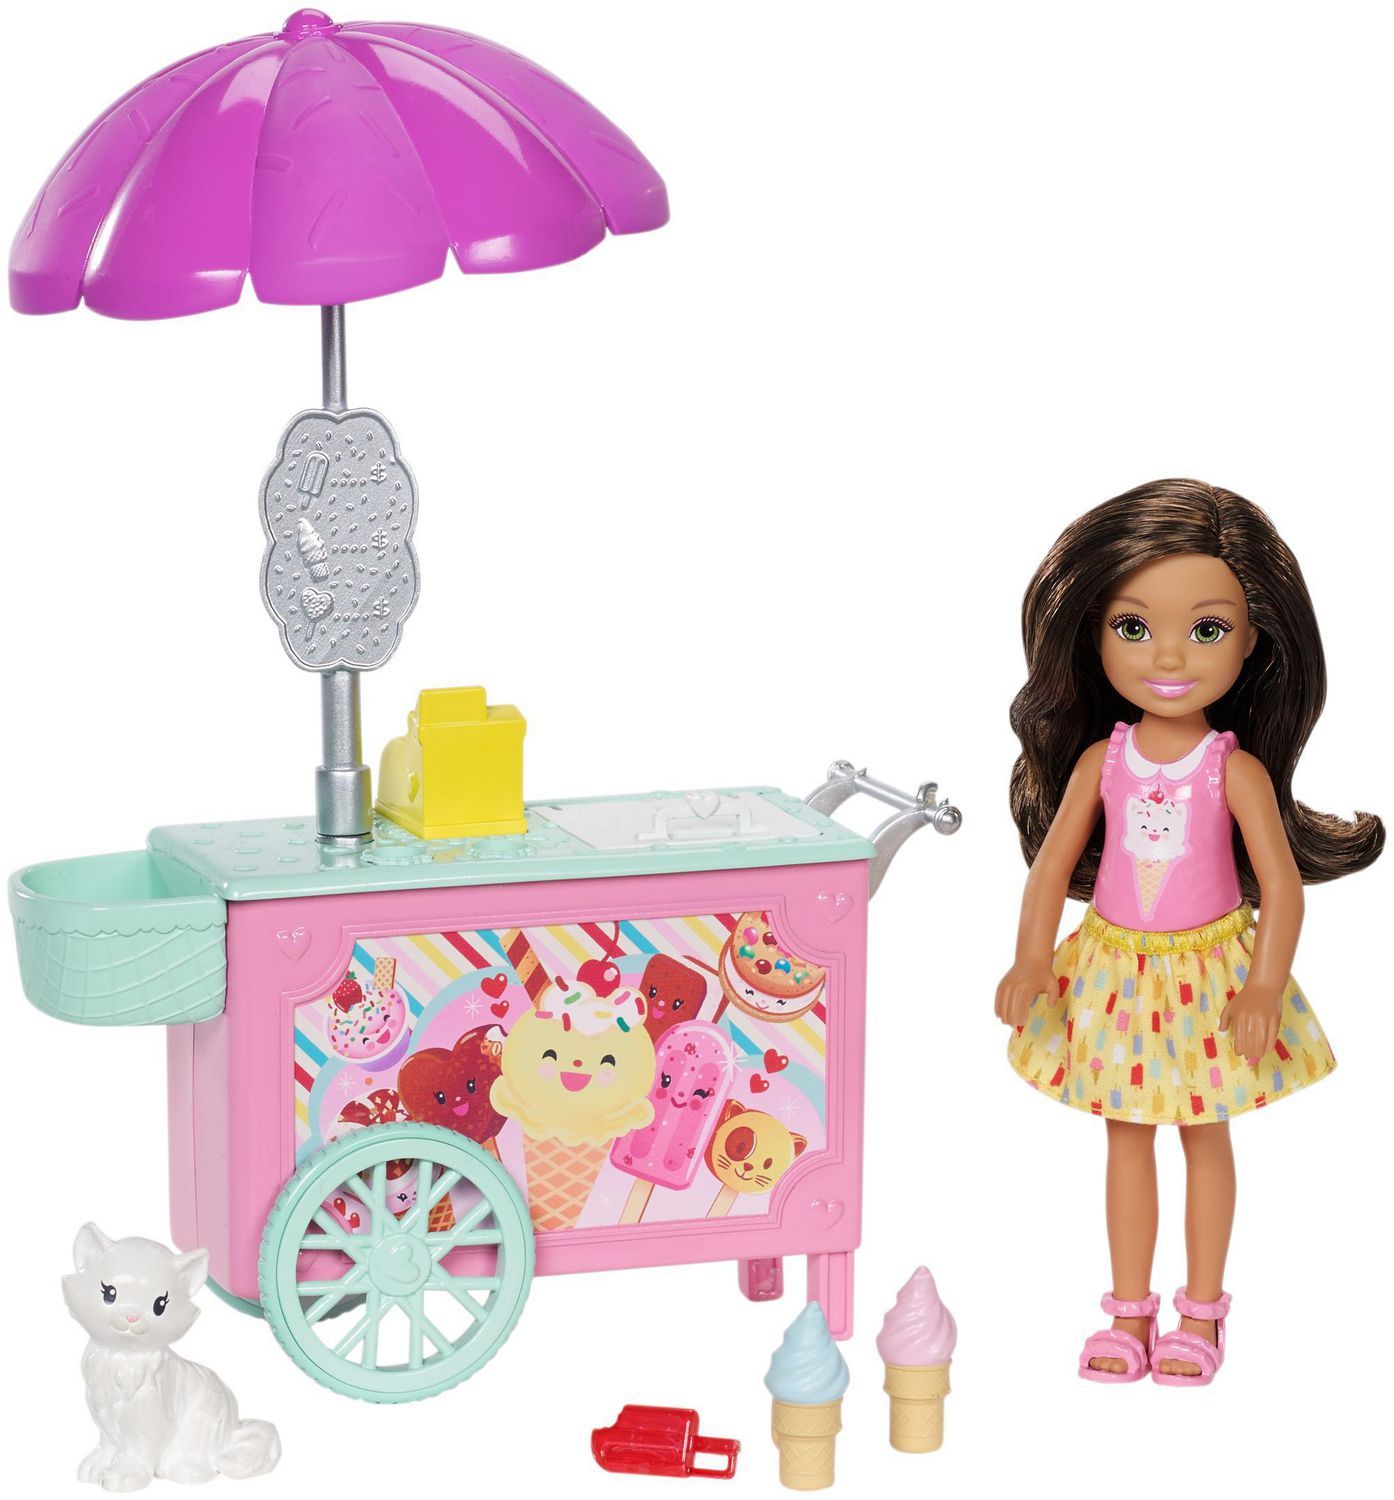 2016 Club Chelsea Barbie Doll Ice Cream Cart Mattel Fdb33 NRFB for sale online